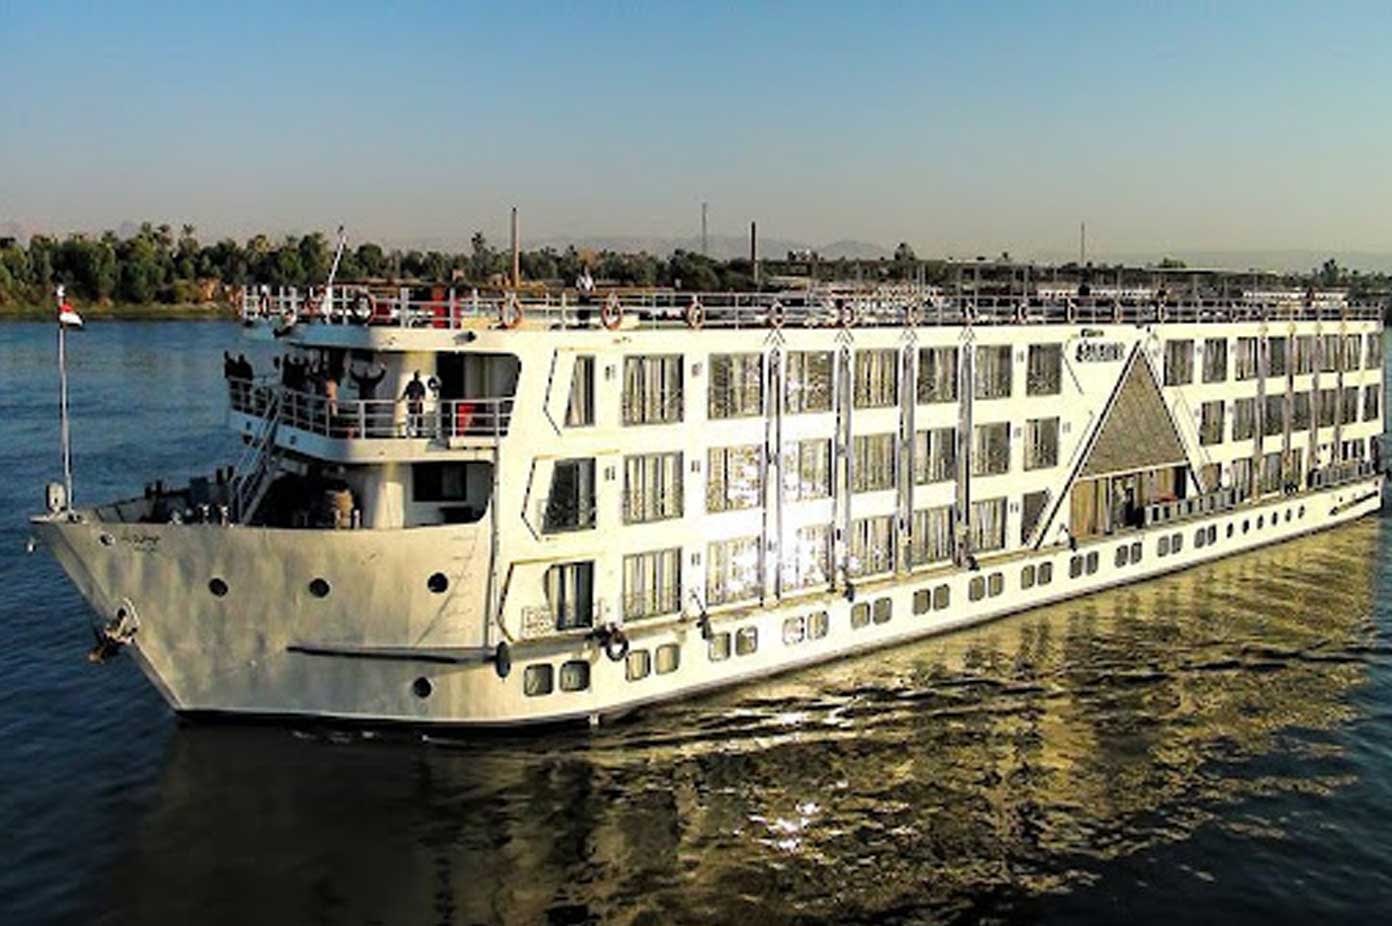 Nile cruise holidays all inclusive